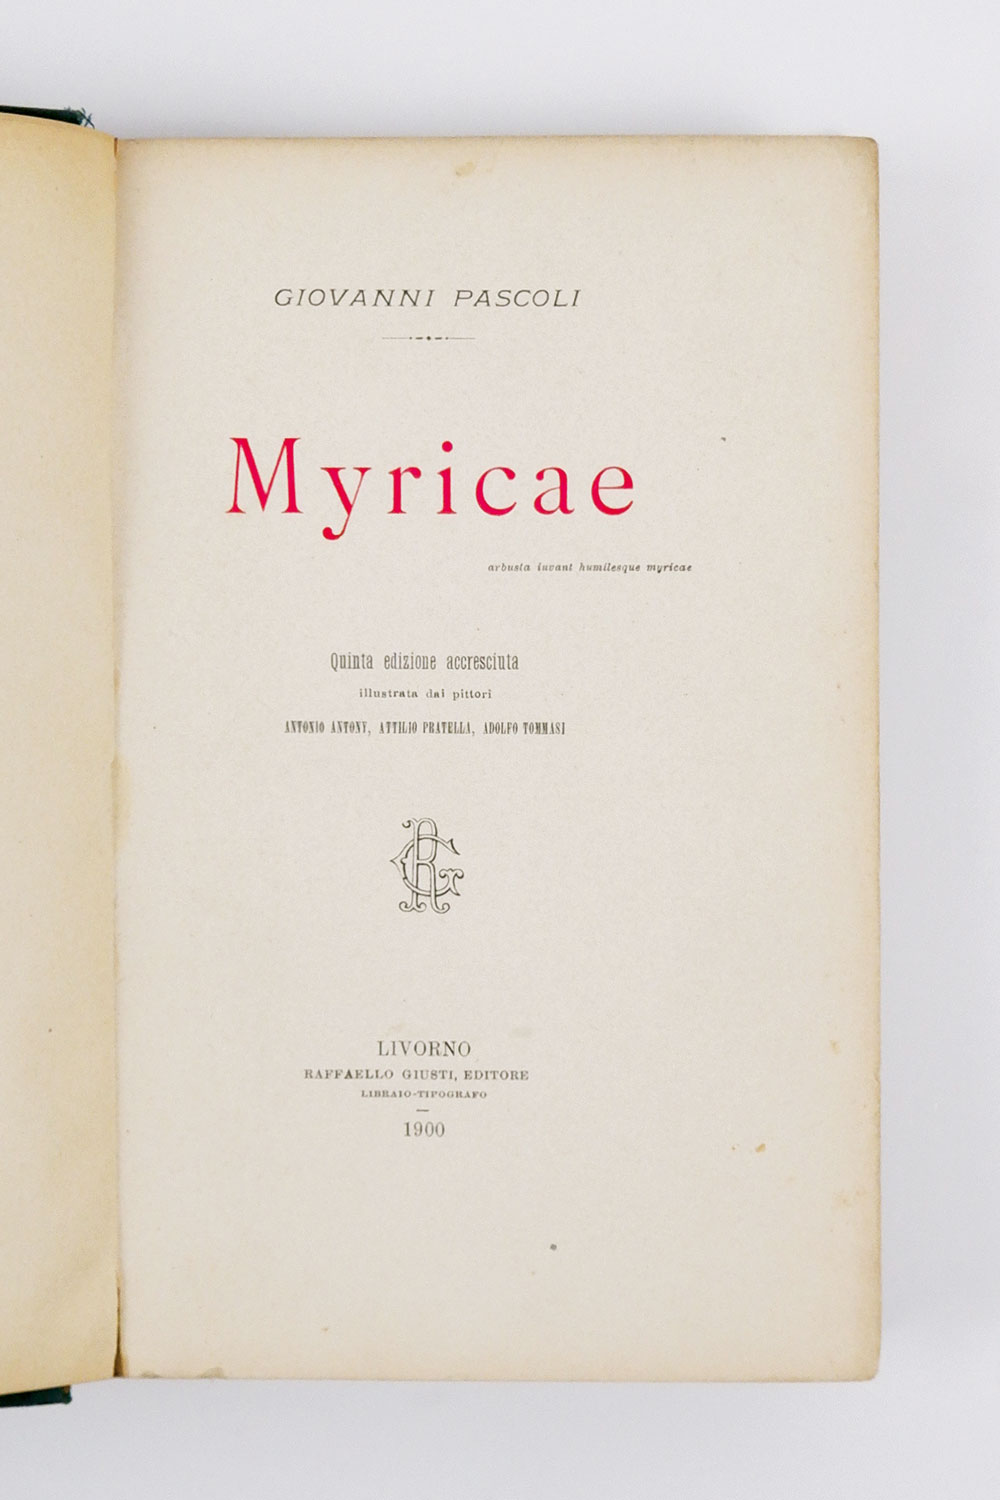 myricae. quinta edizione accresciuta illustrata dai pittori antonio antony, attilio pratella, adolfo tommasi